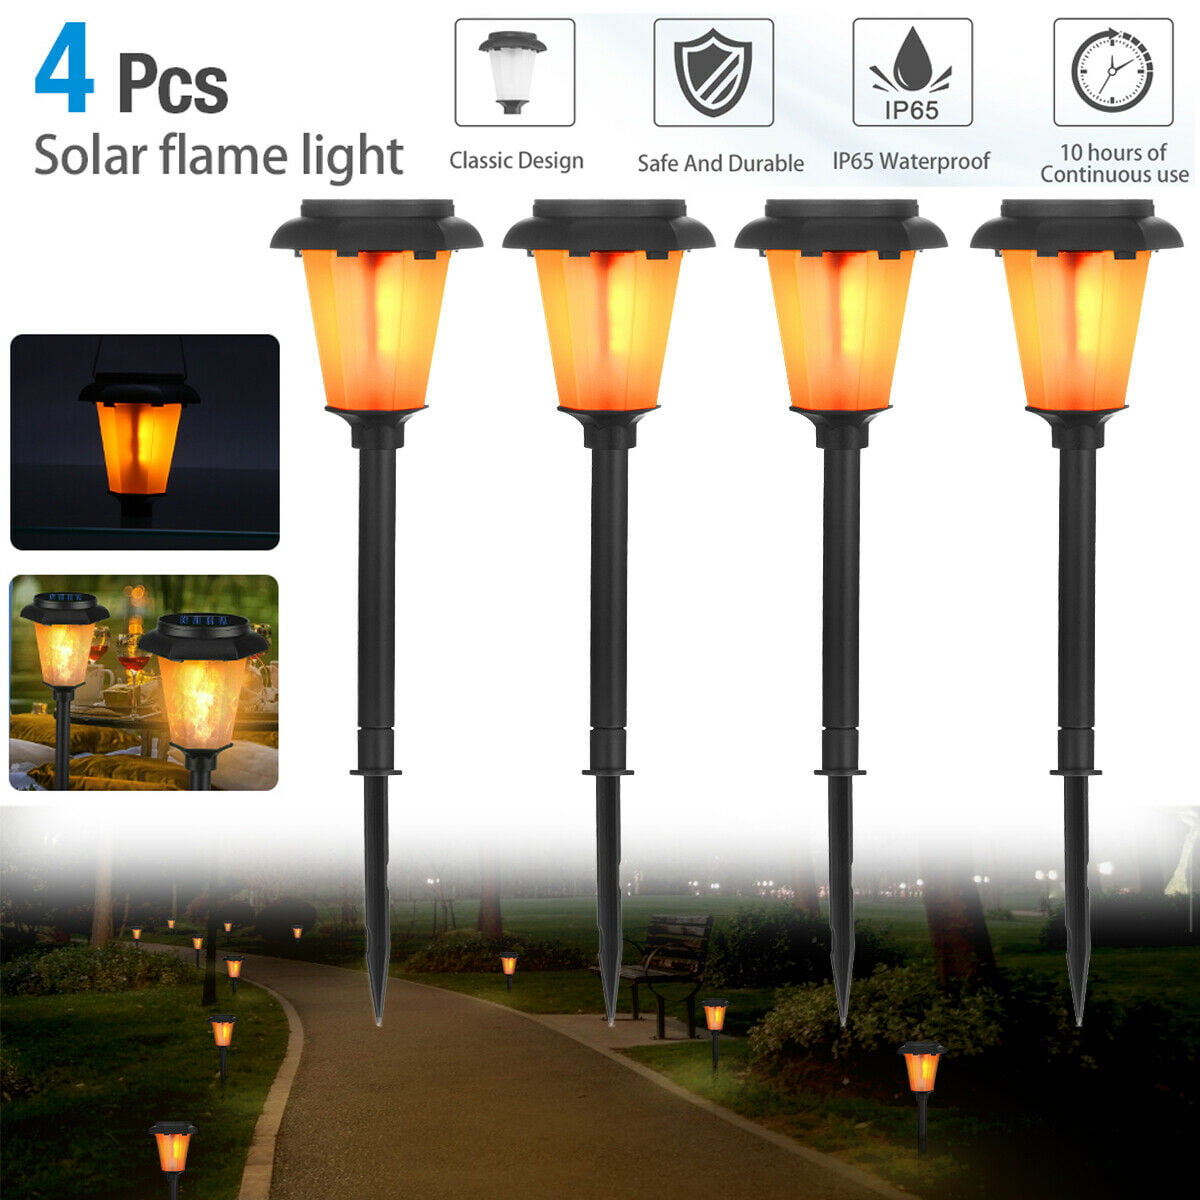 4PCS Solar Power 12LED Lawn Light Flickering Flame Garden Yard Torch Halloween 